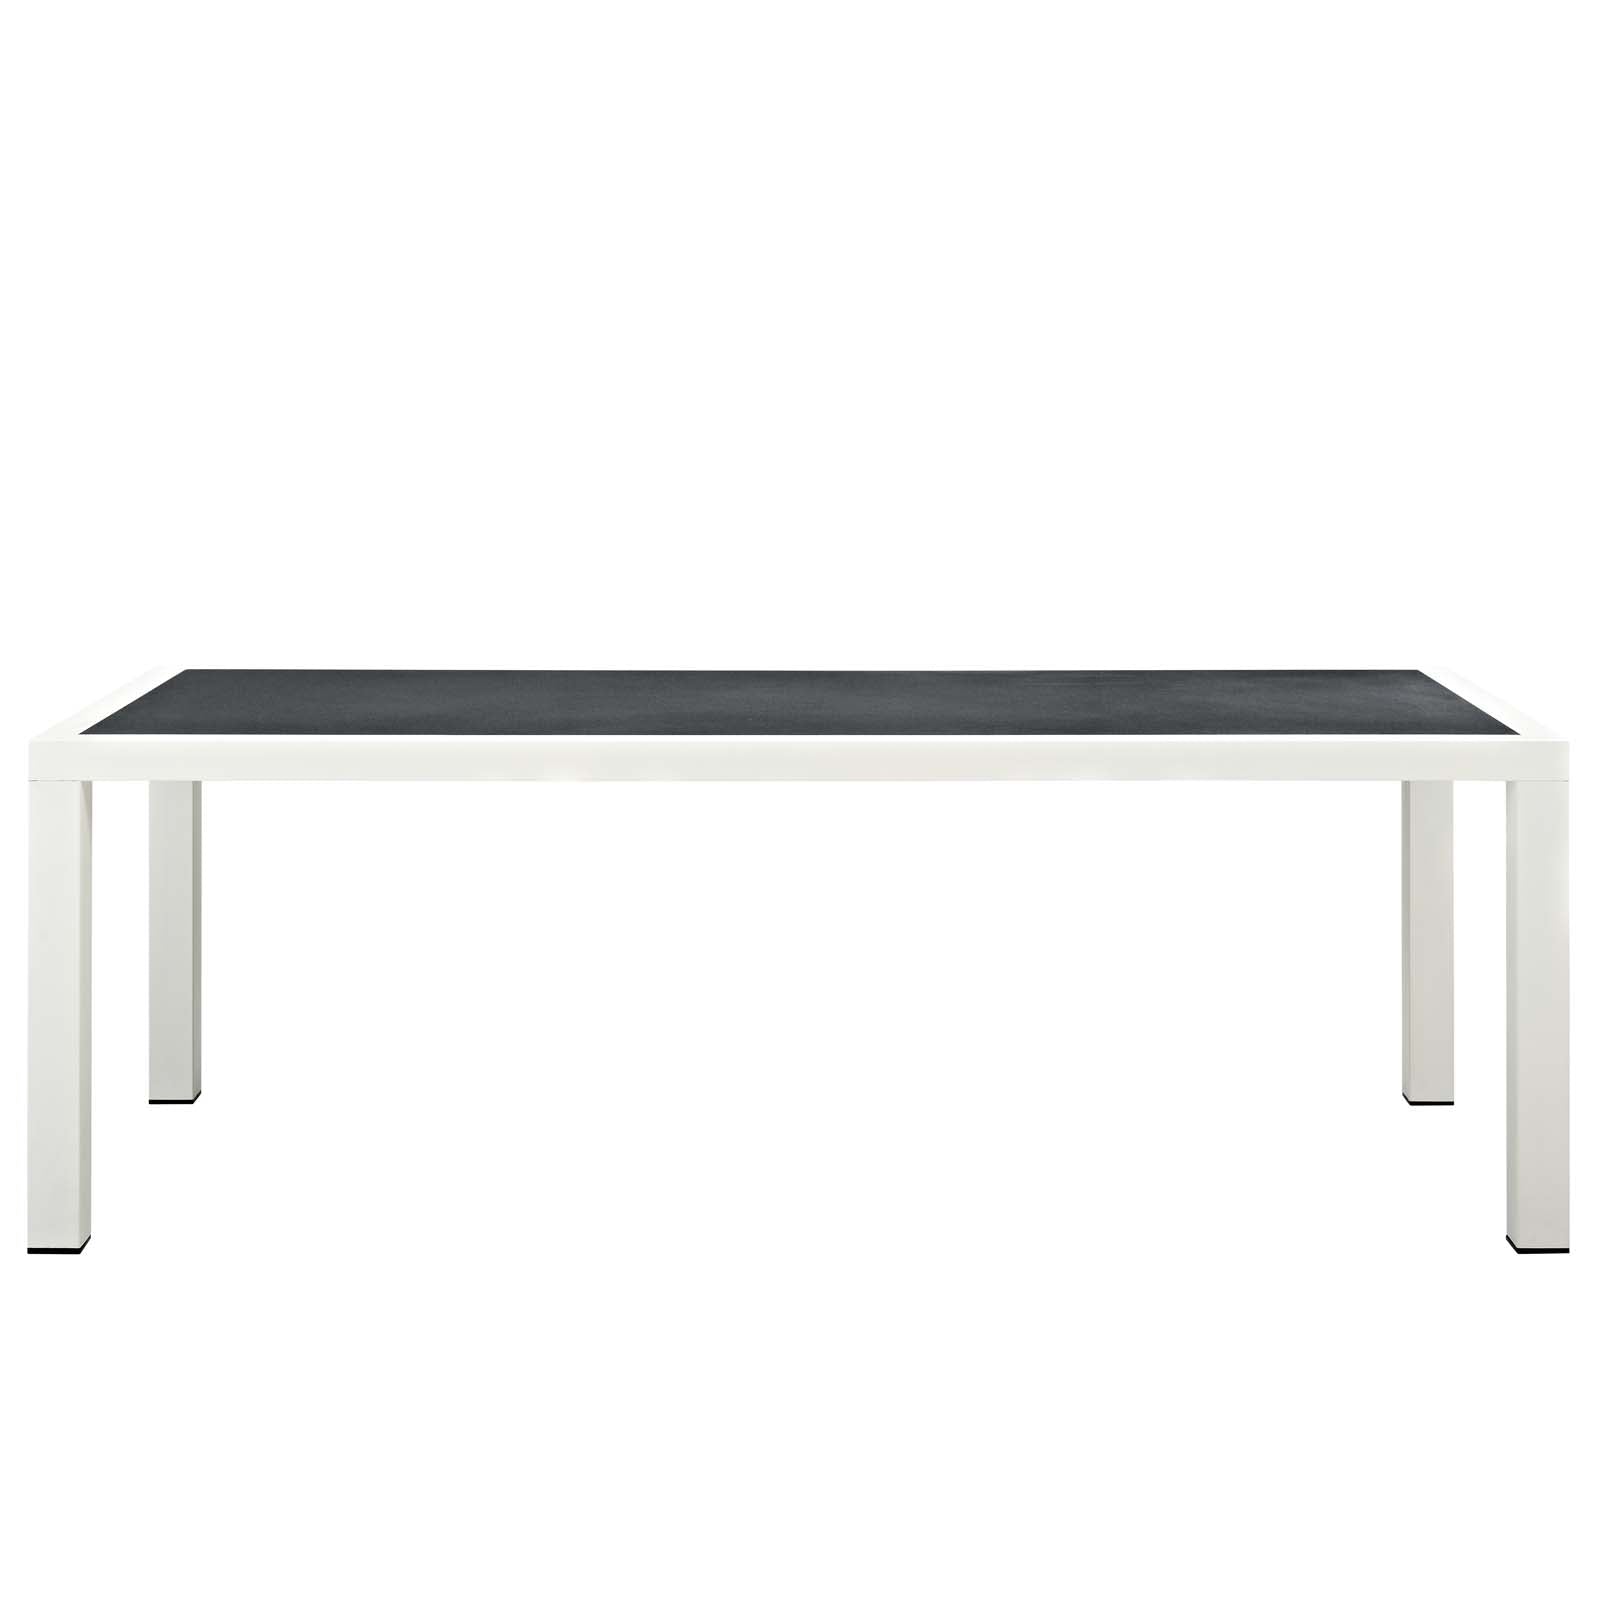 Modway - Stance 9 Piece Outdoor Patio Aluminum Dining Set - EEI-3186